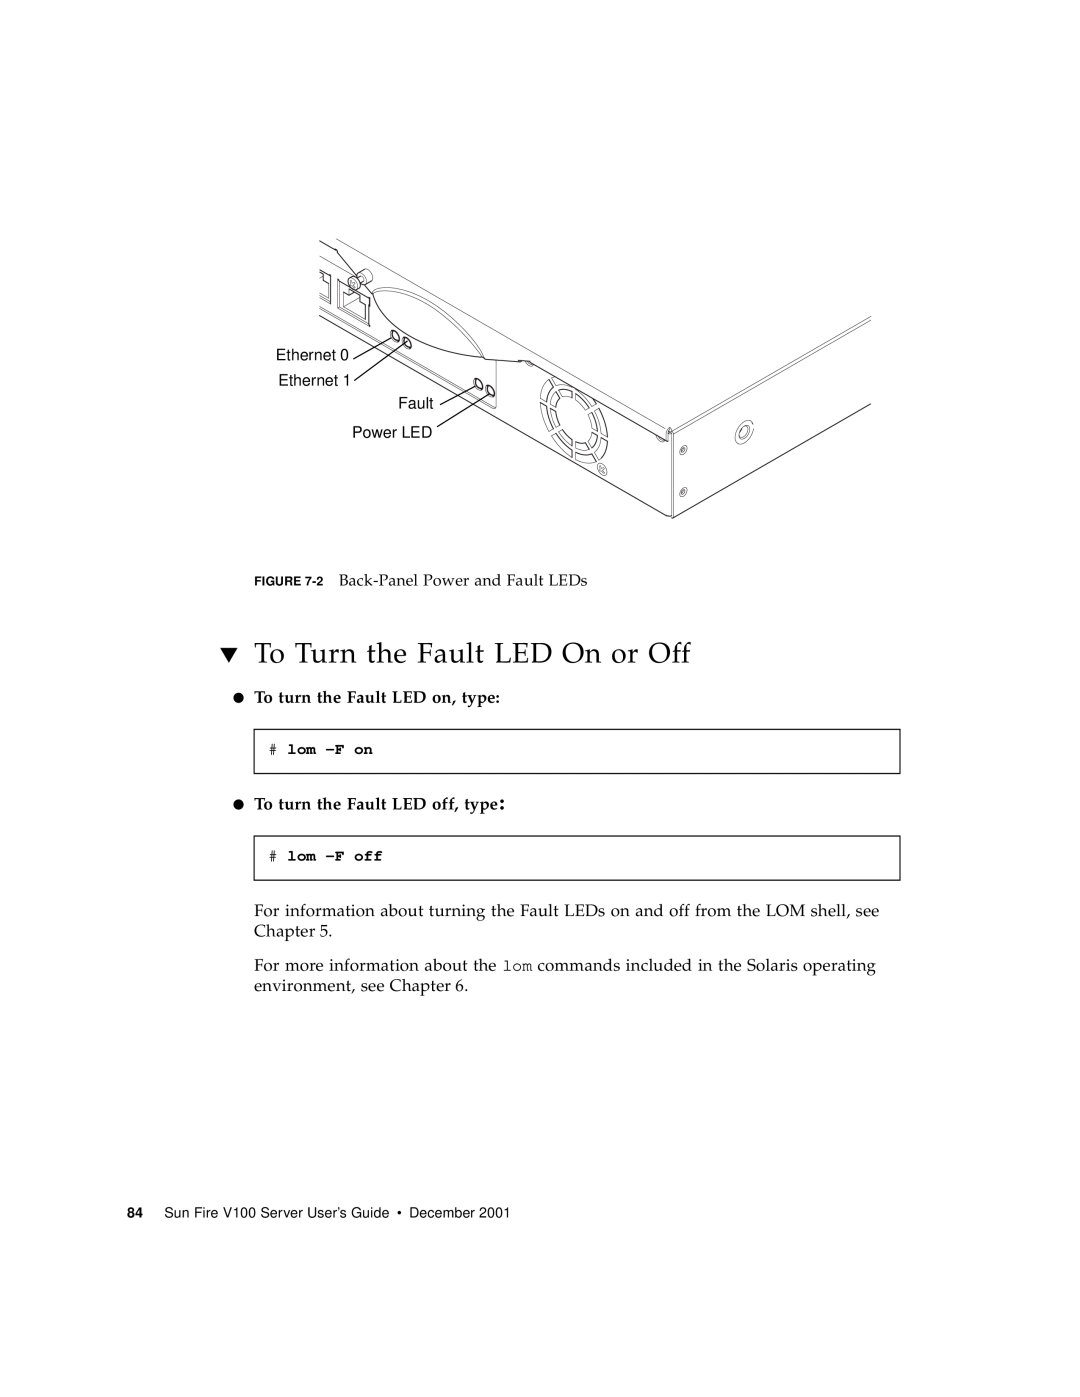 Sun Microsystems Sun Fire V100 manual To Turn the Fault LED On or Off, To turn the Fault LED on, type 